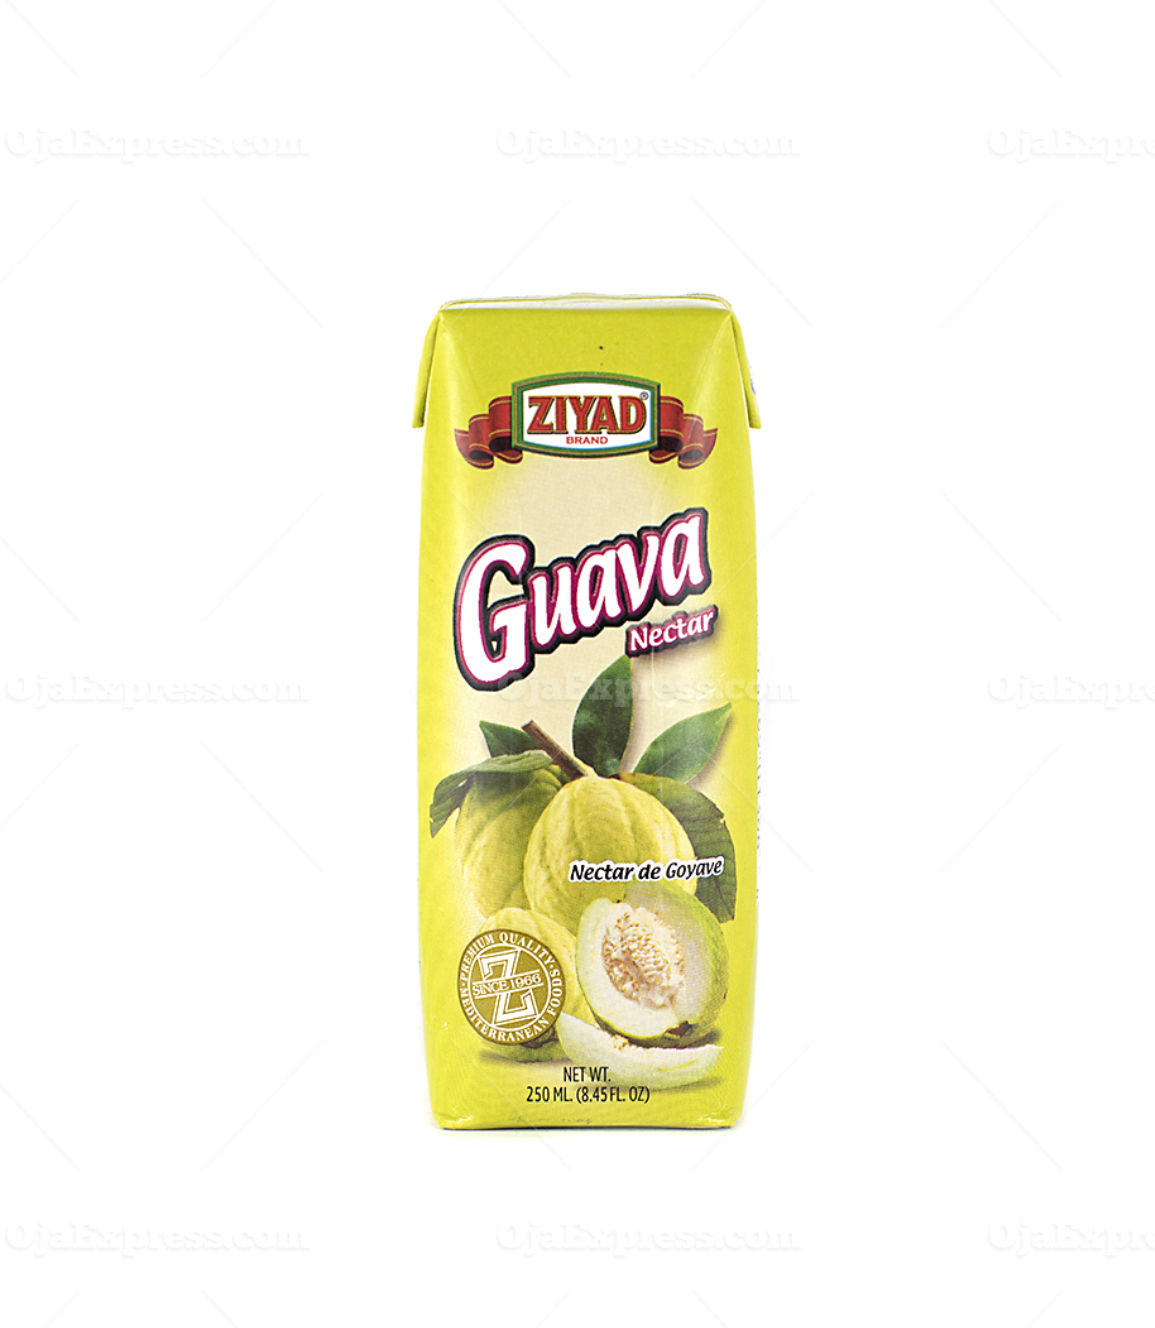 ziyad-guava-nectar-250-ml-8-45-oz-tetra-pack